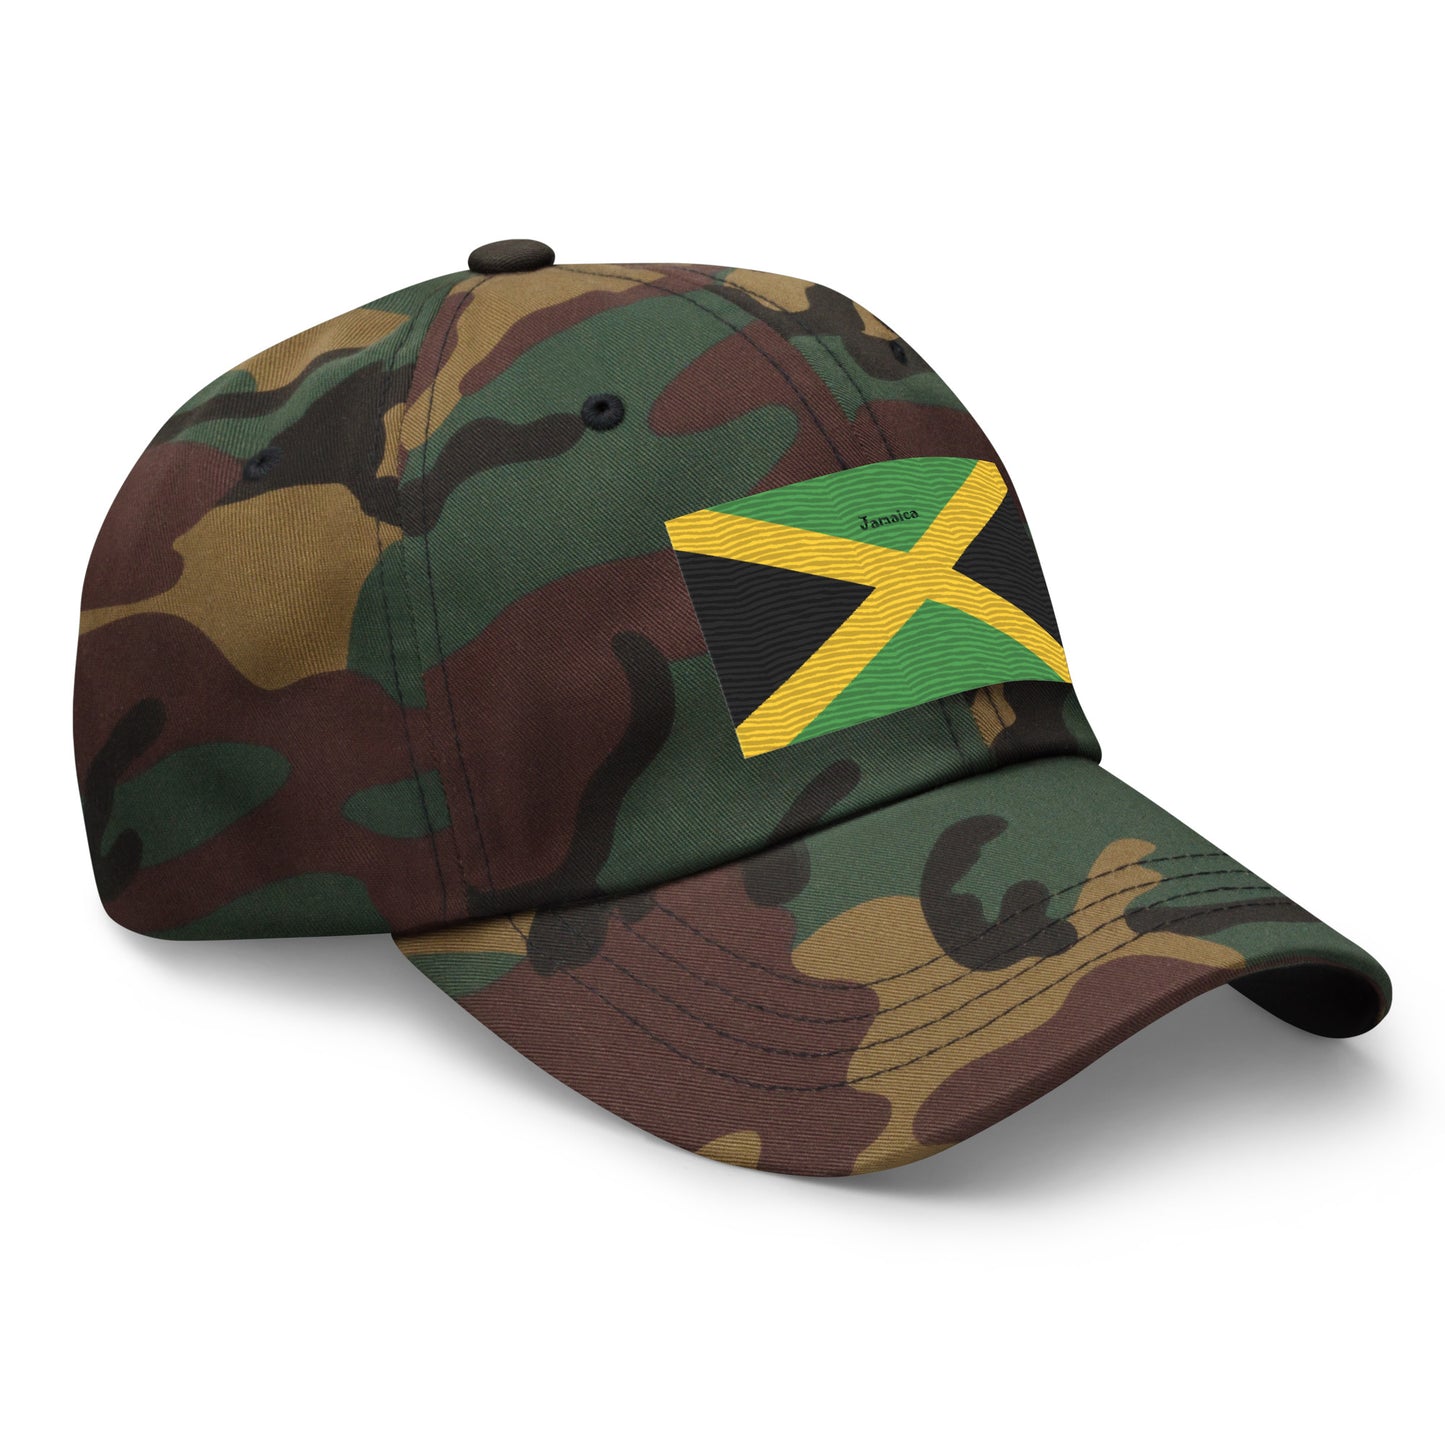 Adjustable dad hat featuring Jamaican flag applique